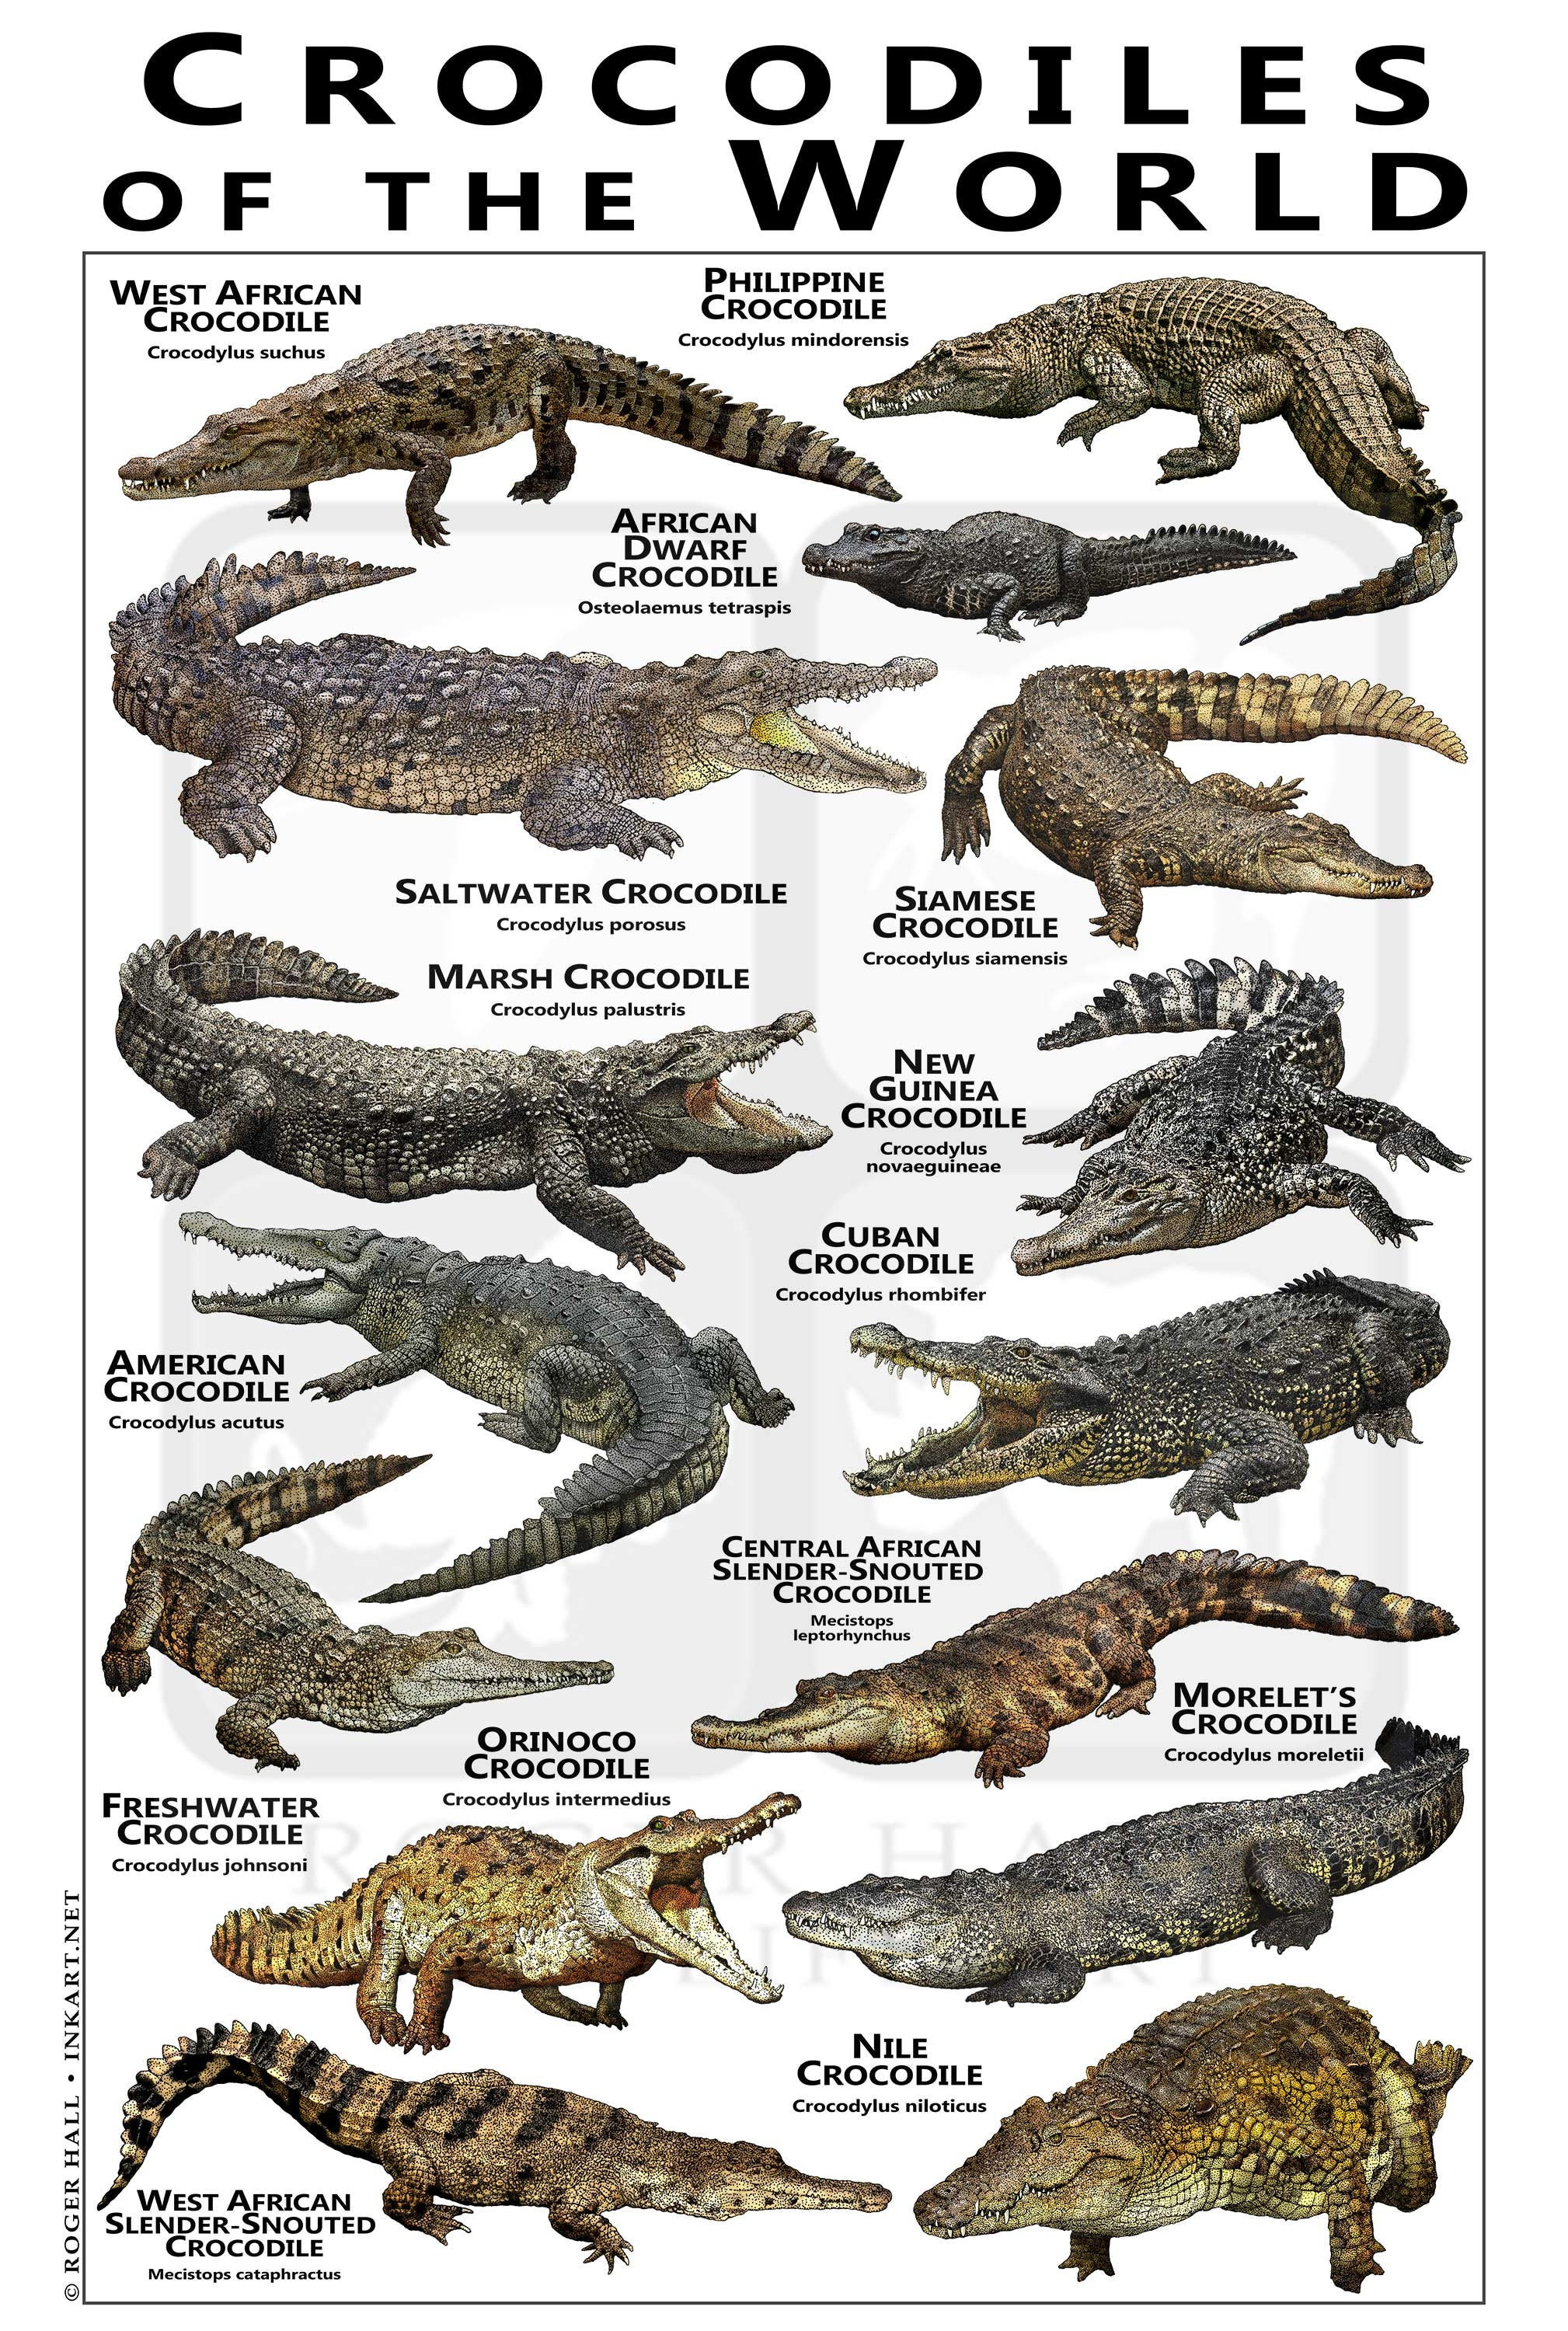 Le Crocodile Porosus